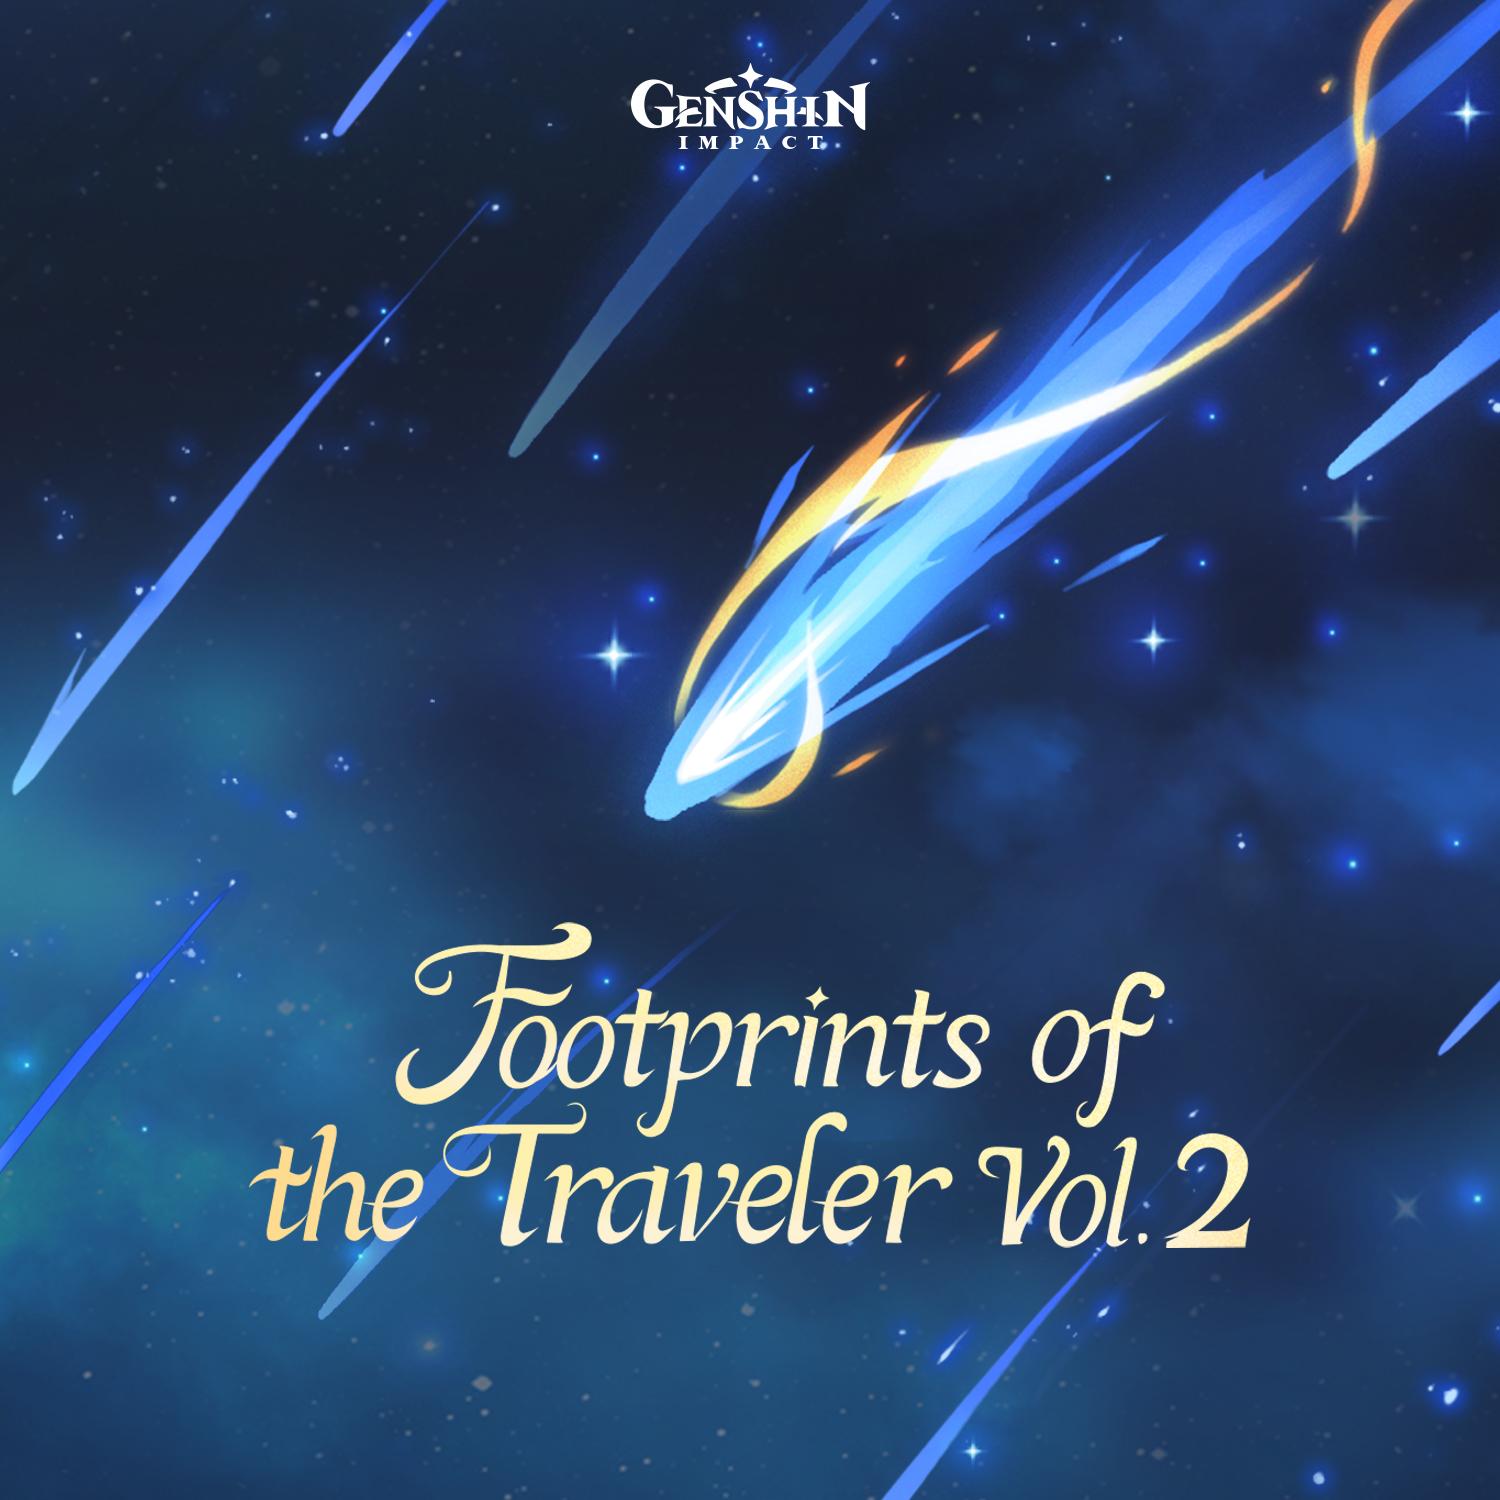 Genshin Impact - Footprints of the Traveler Vol. 2